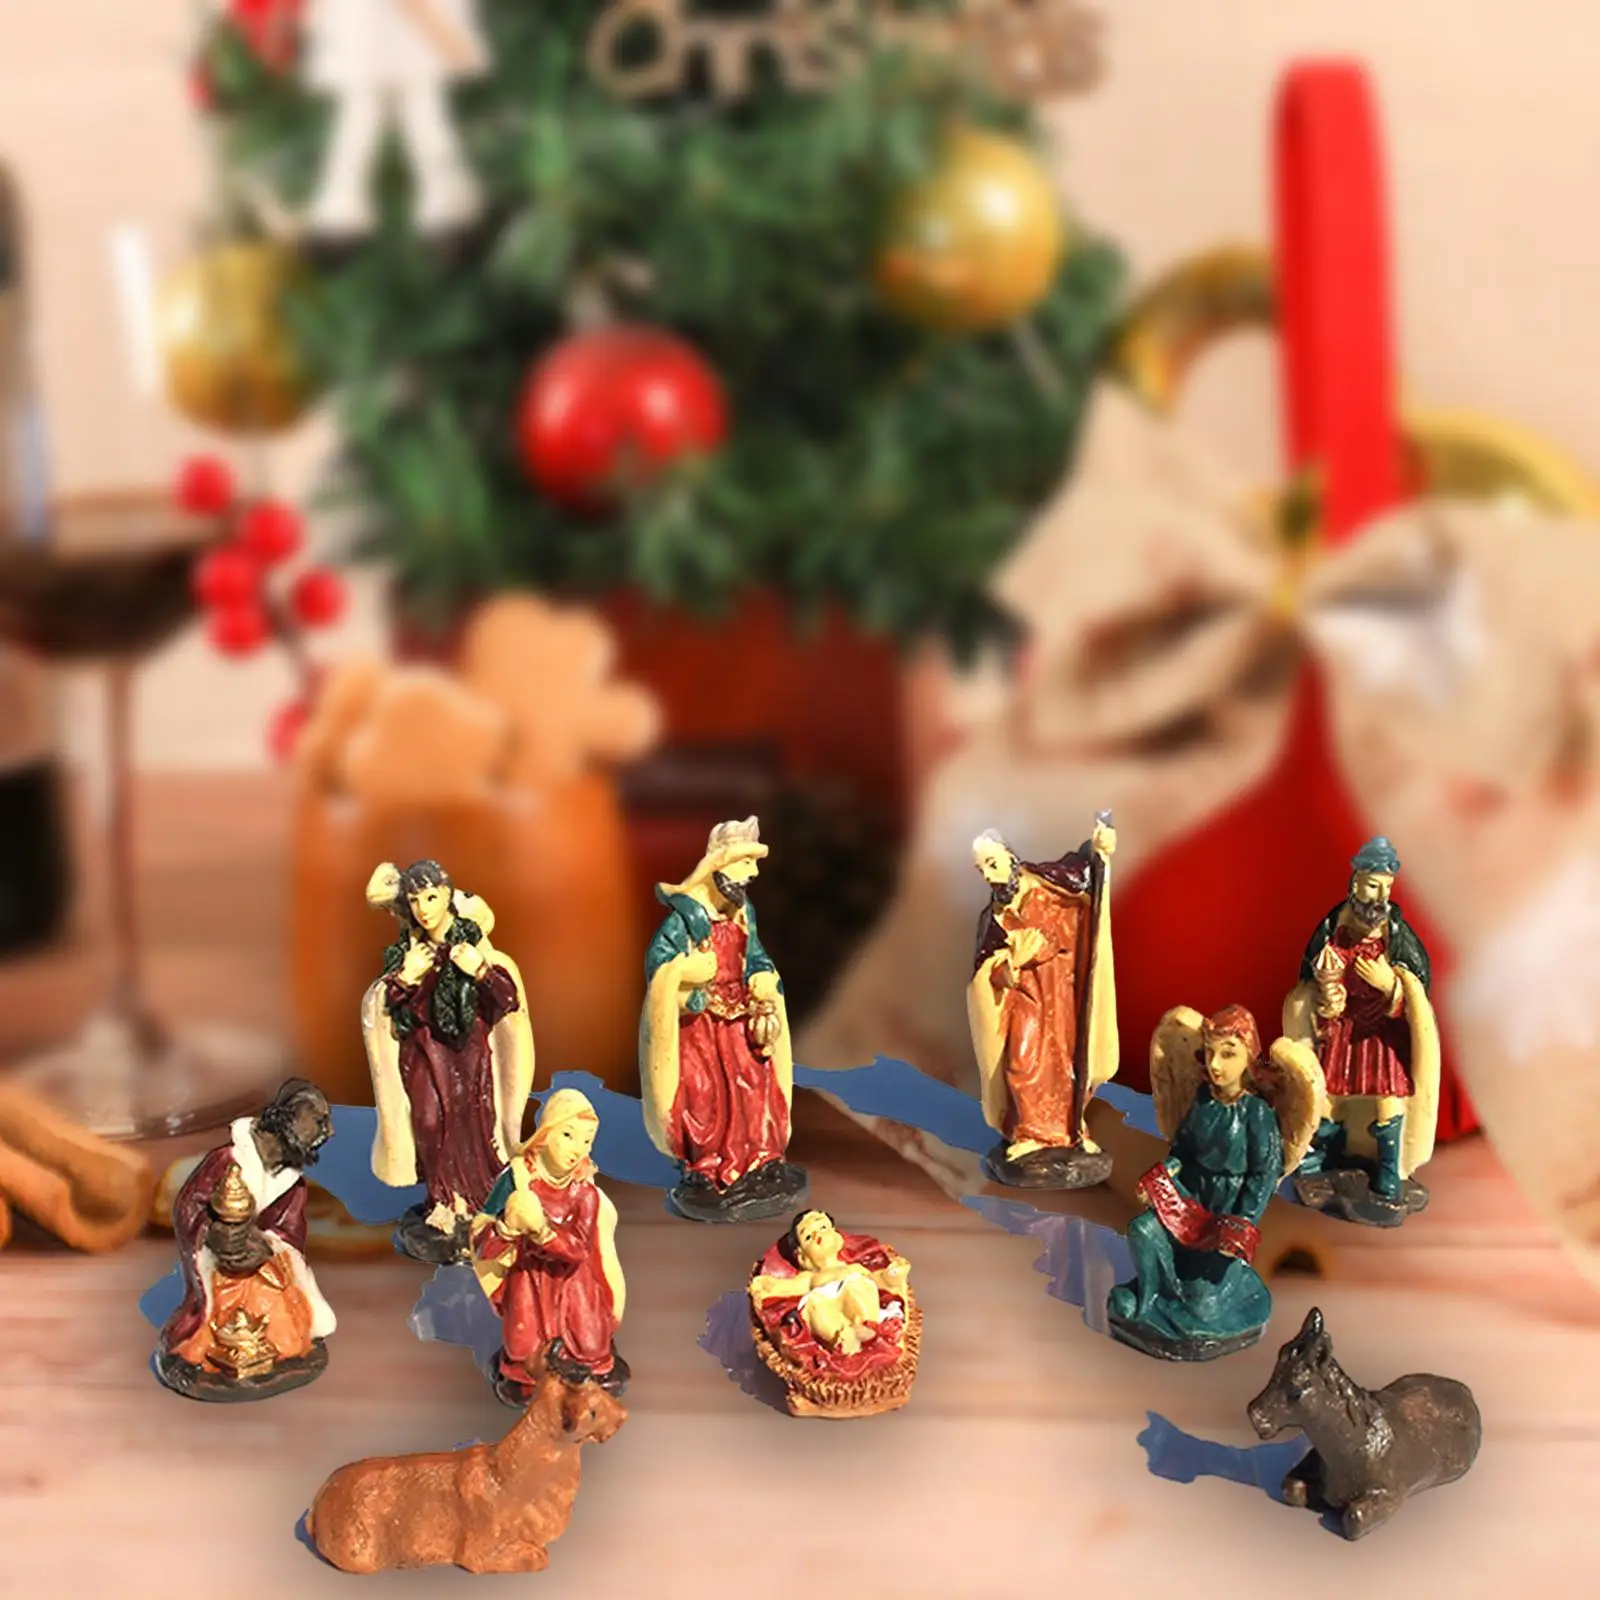 10x Nativity Figures Set Decoration Portable Hand Painted Holiday Season Decor Birth of Jesus Ornament for School Decoration